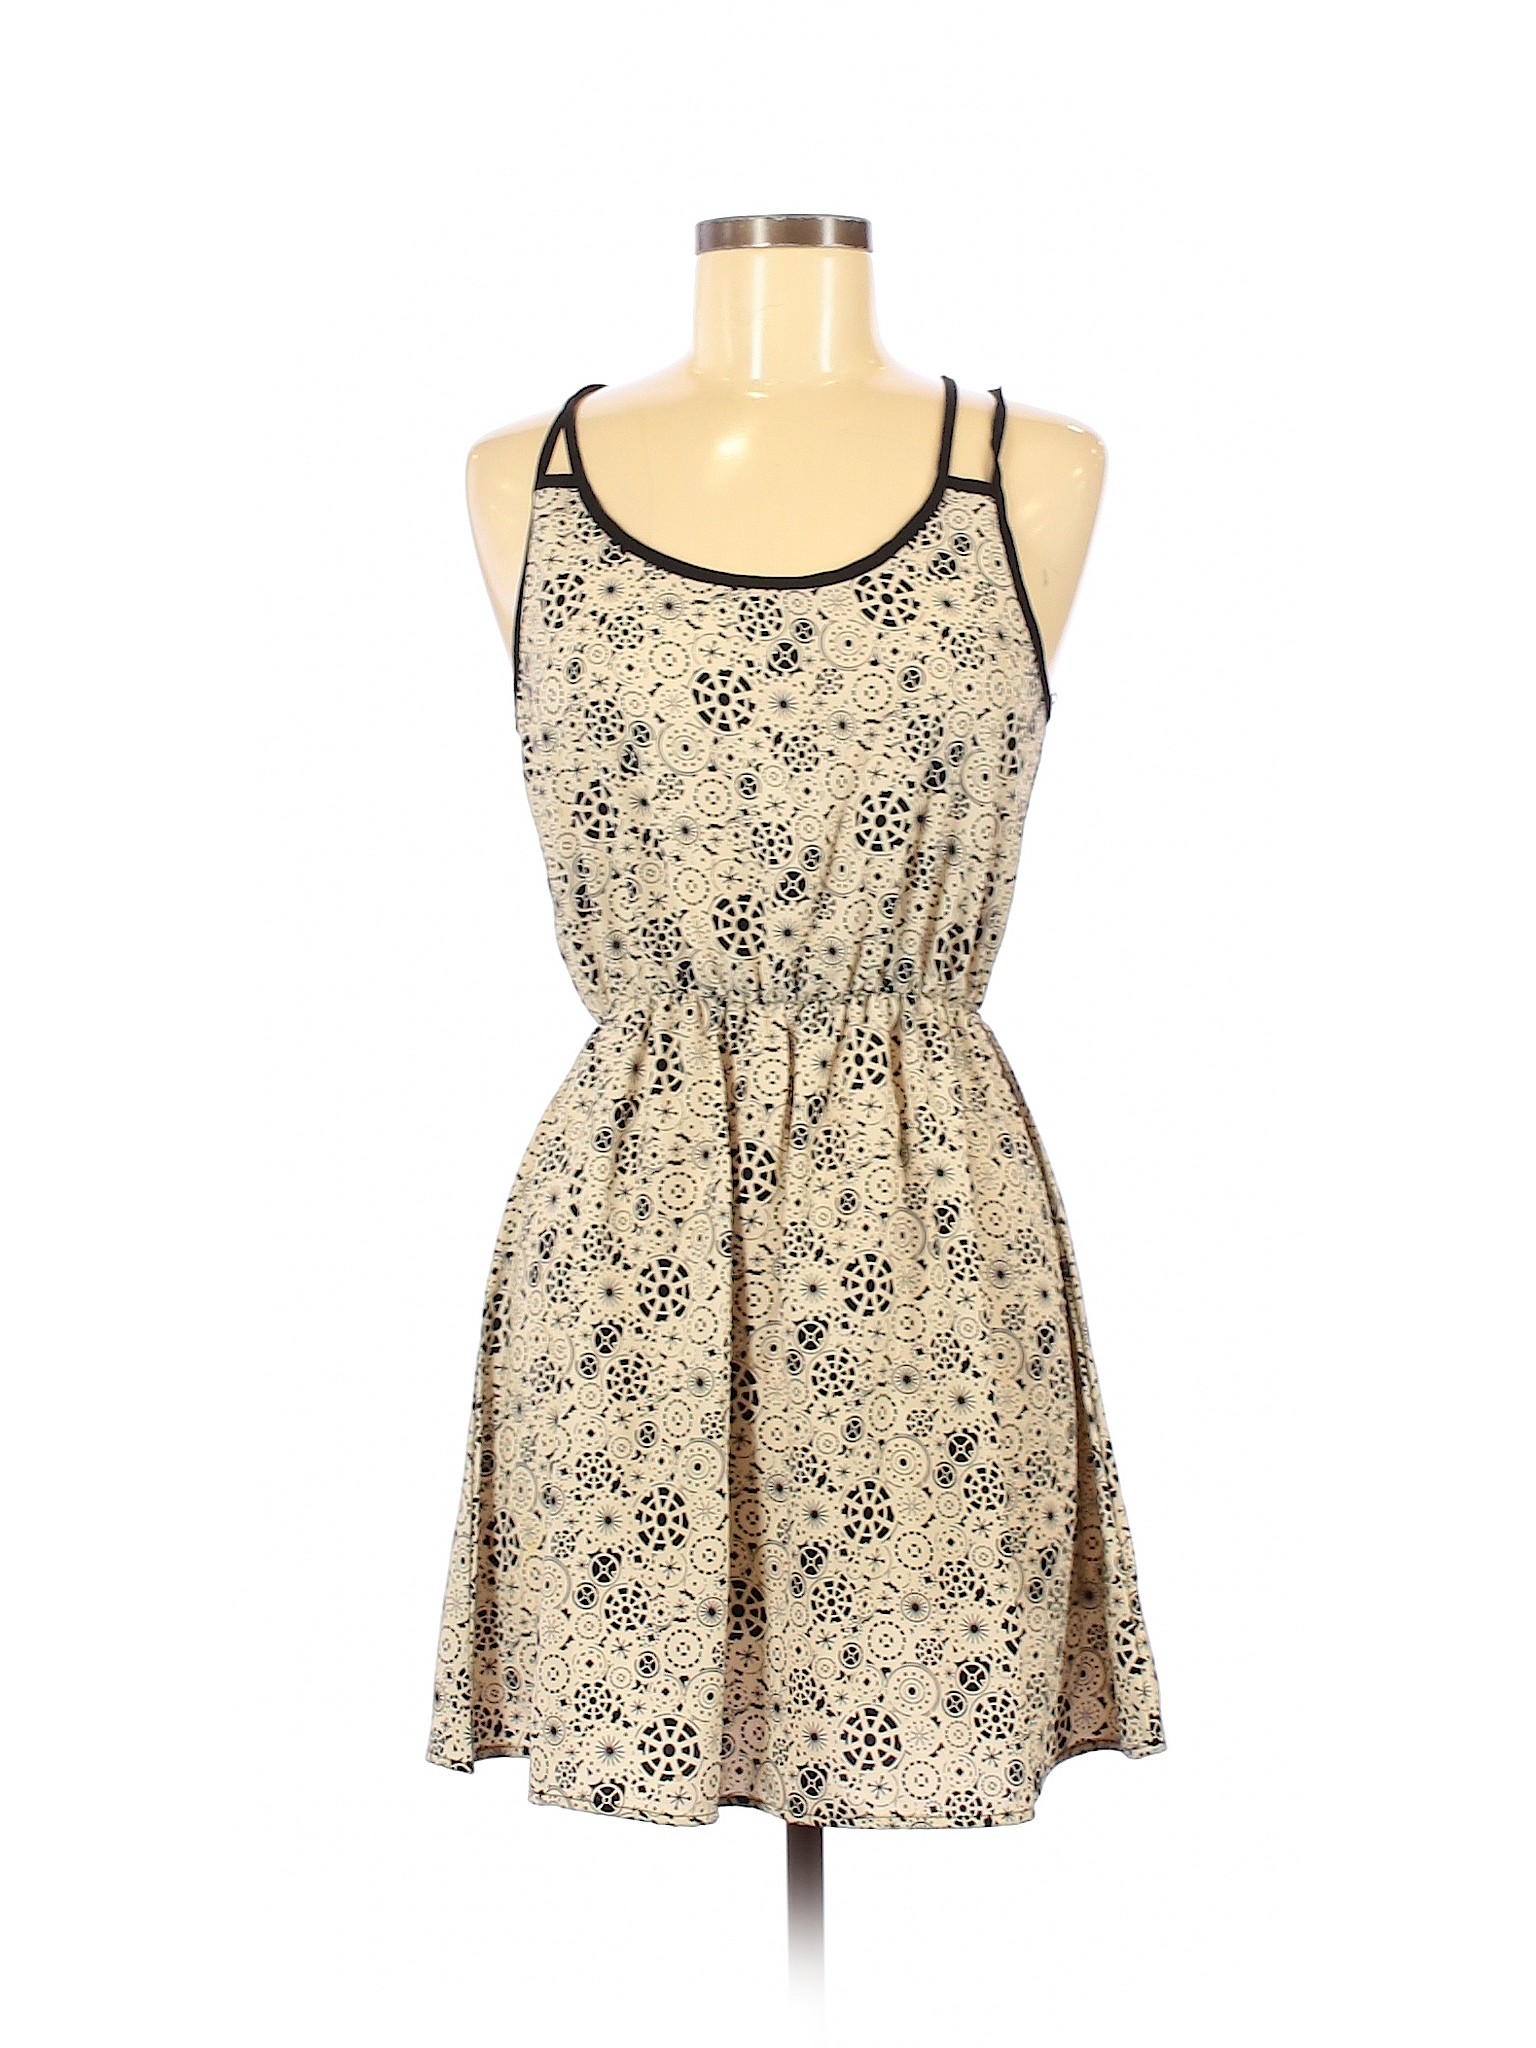 Mon Ami Women Brown Casual Dress S | eBay